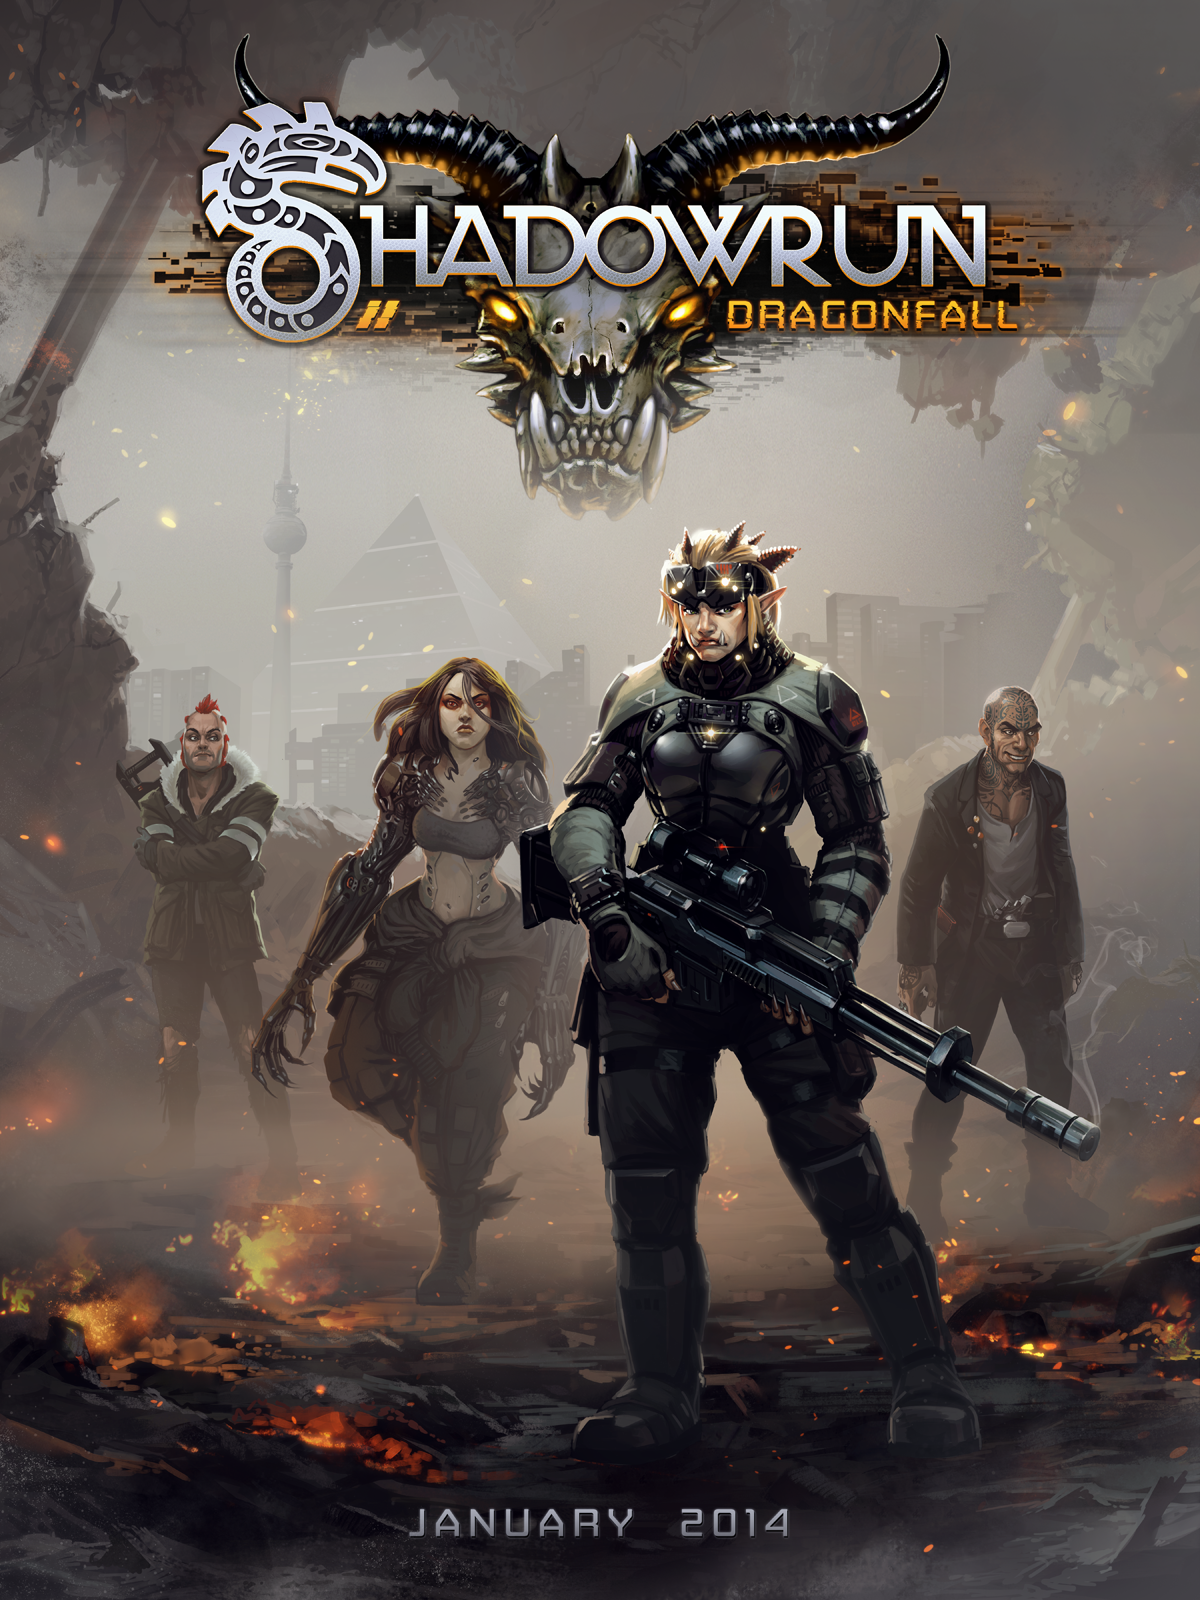 Shadowrun: Dragonfall (Image: Harebrained Schemes)